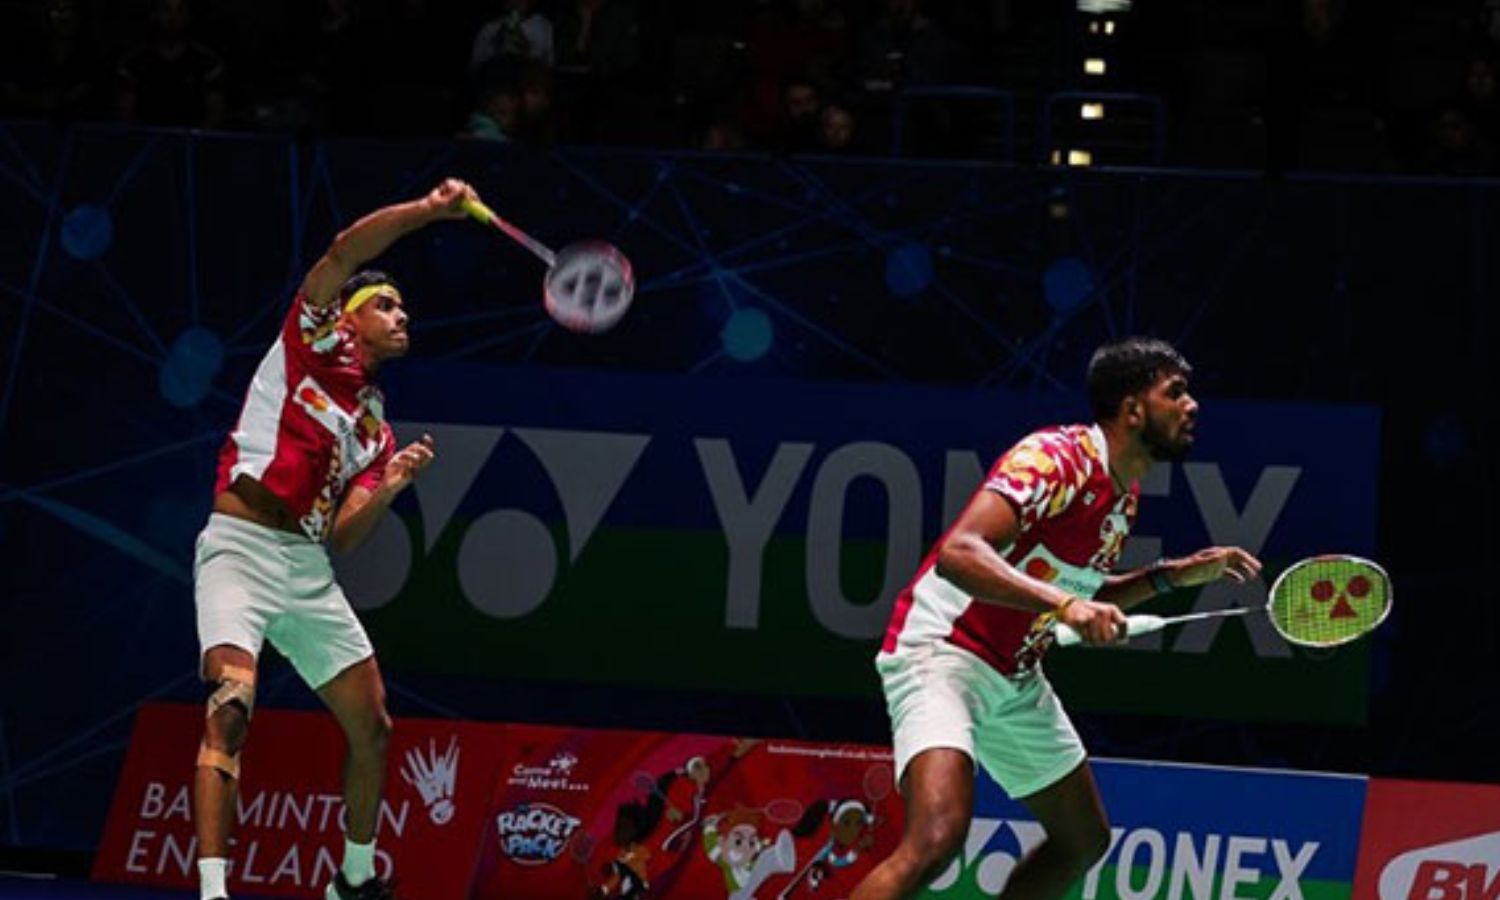 indonesiaopen:indiassatwikchiragpairstormsintomaidensuper1000finals;prannoybowsout